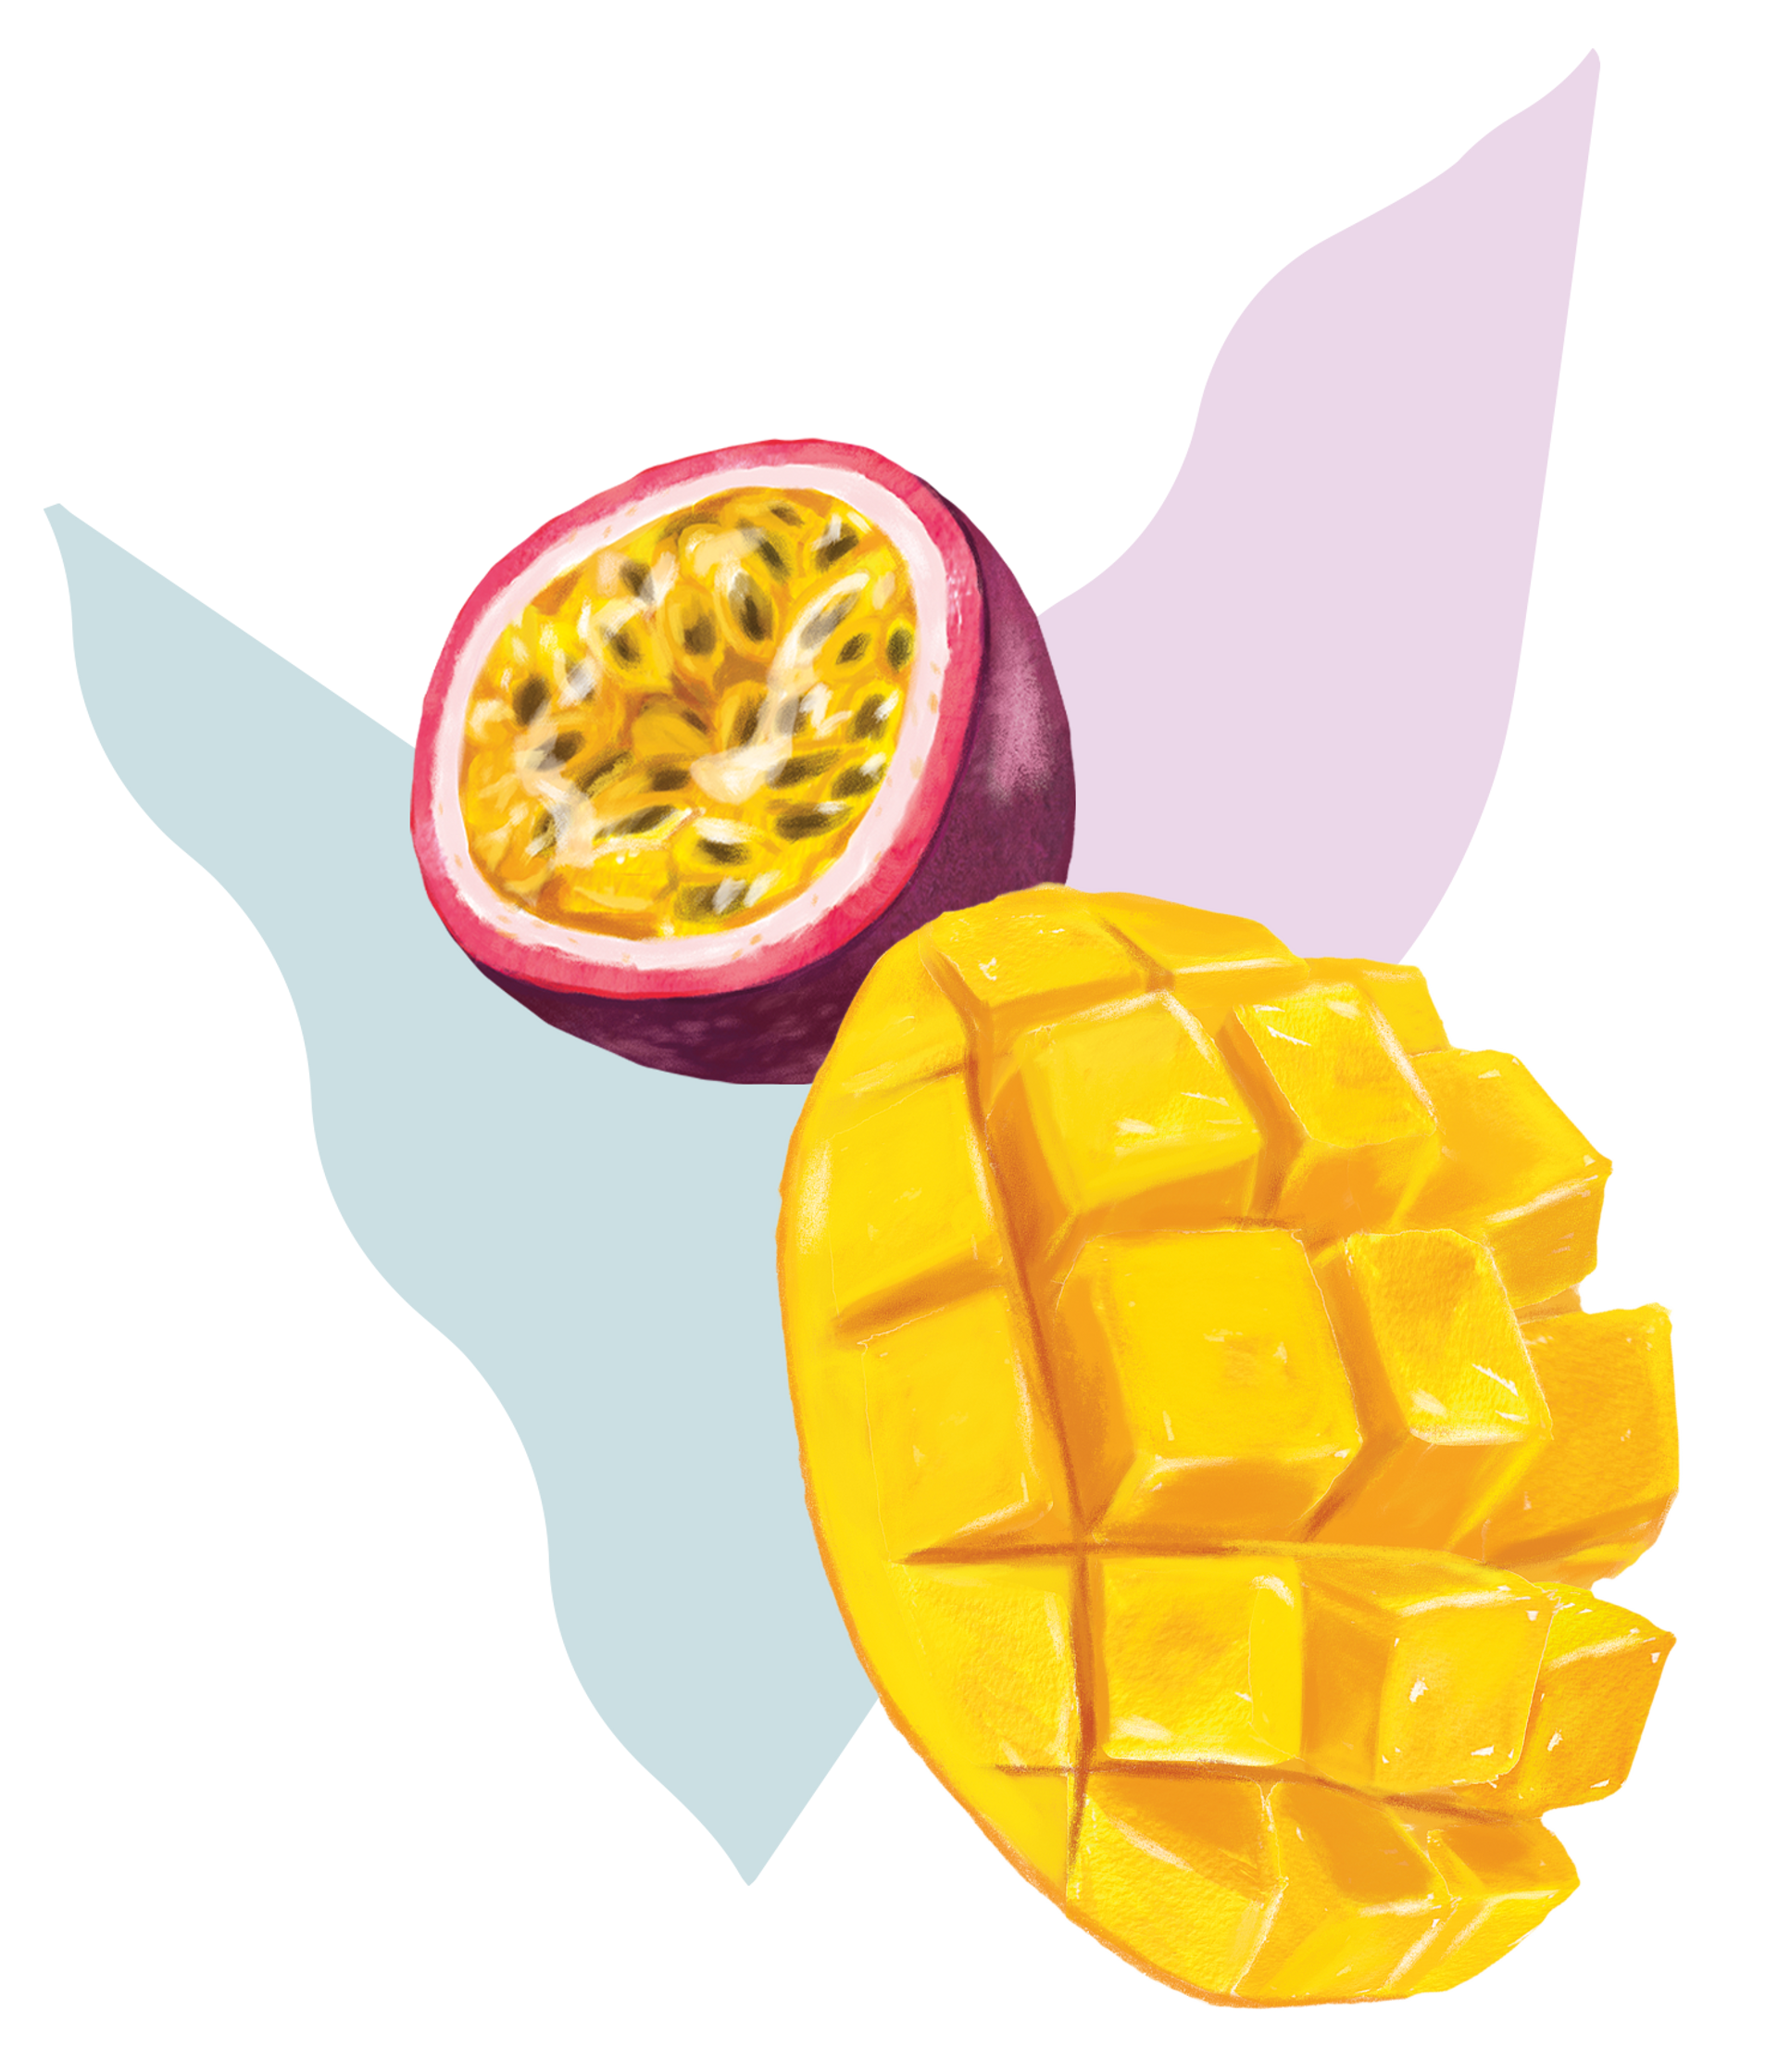 Colourful fruit illustrations for Chobani Yogurt packaging design by Our Revolution